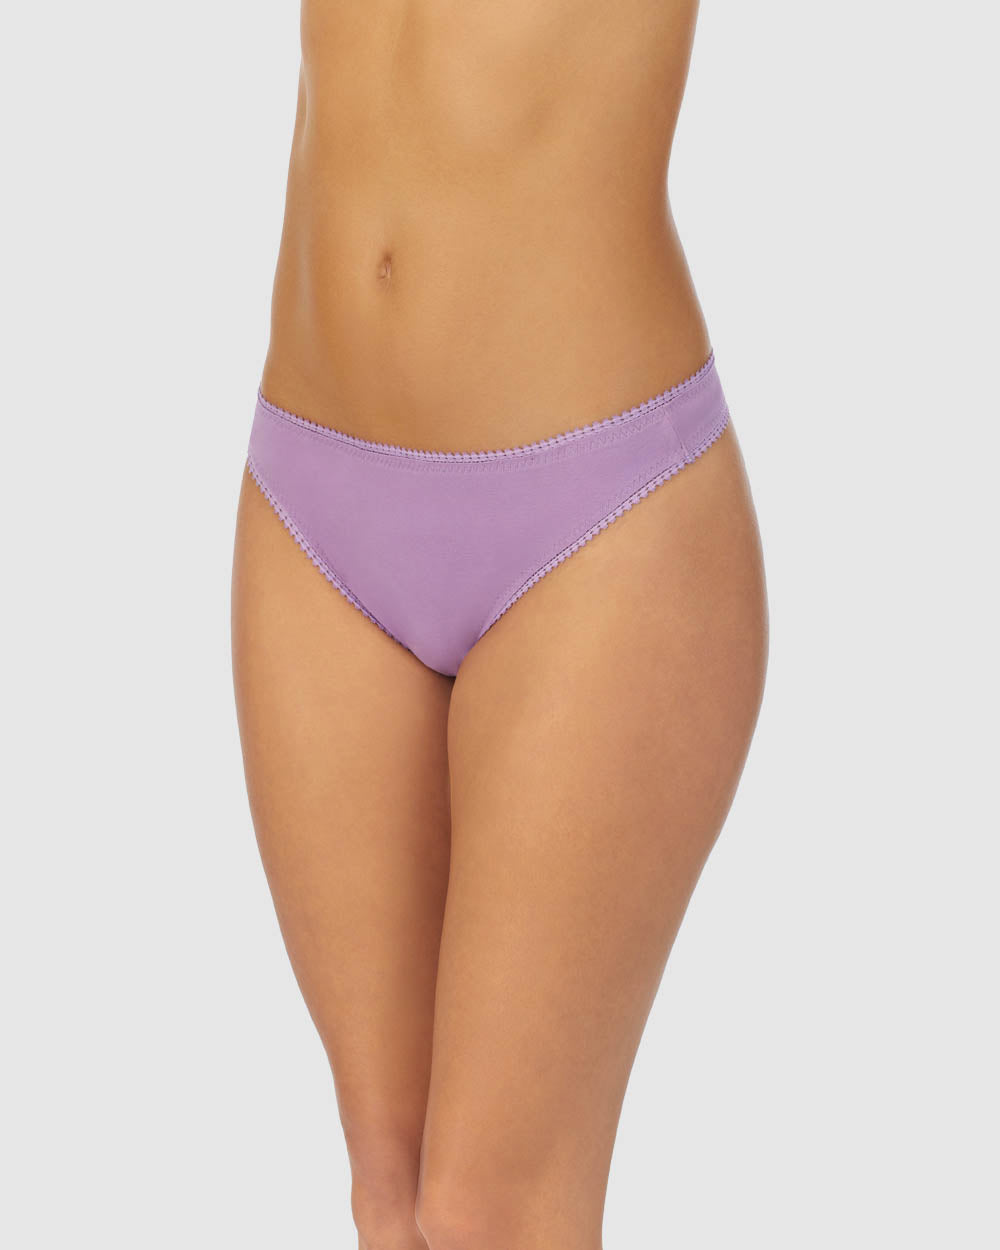 A lady wearing violet flower Cabana Cotton Hip G Thong Underwear